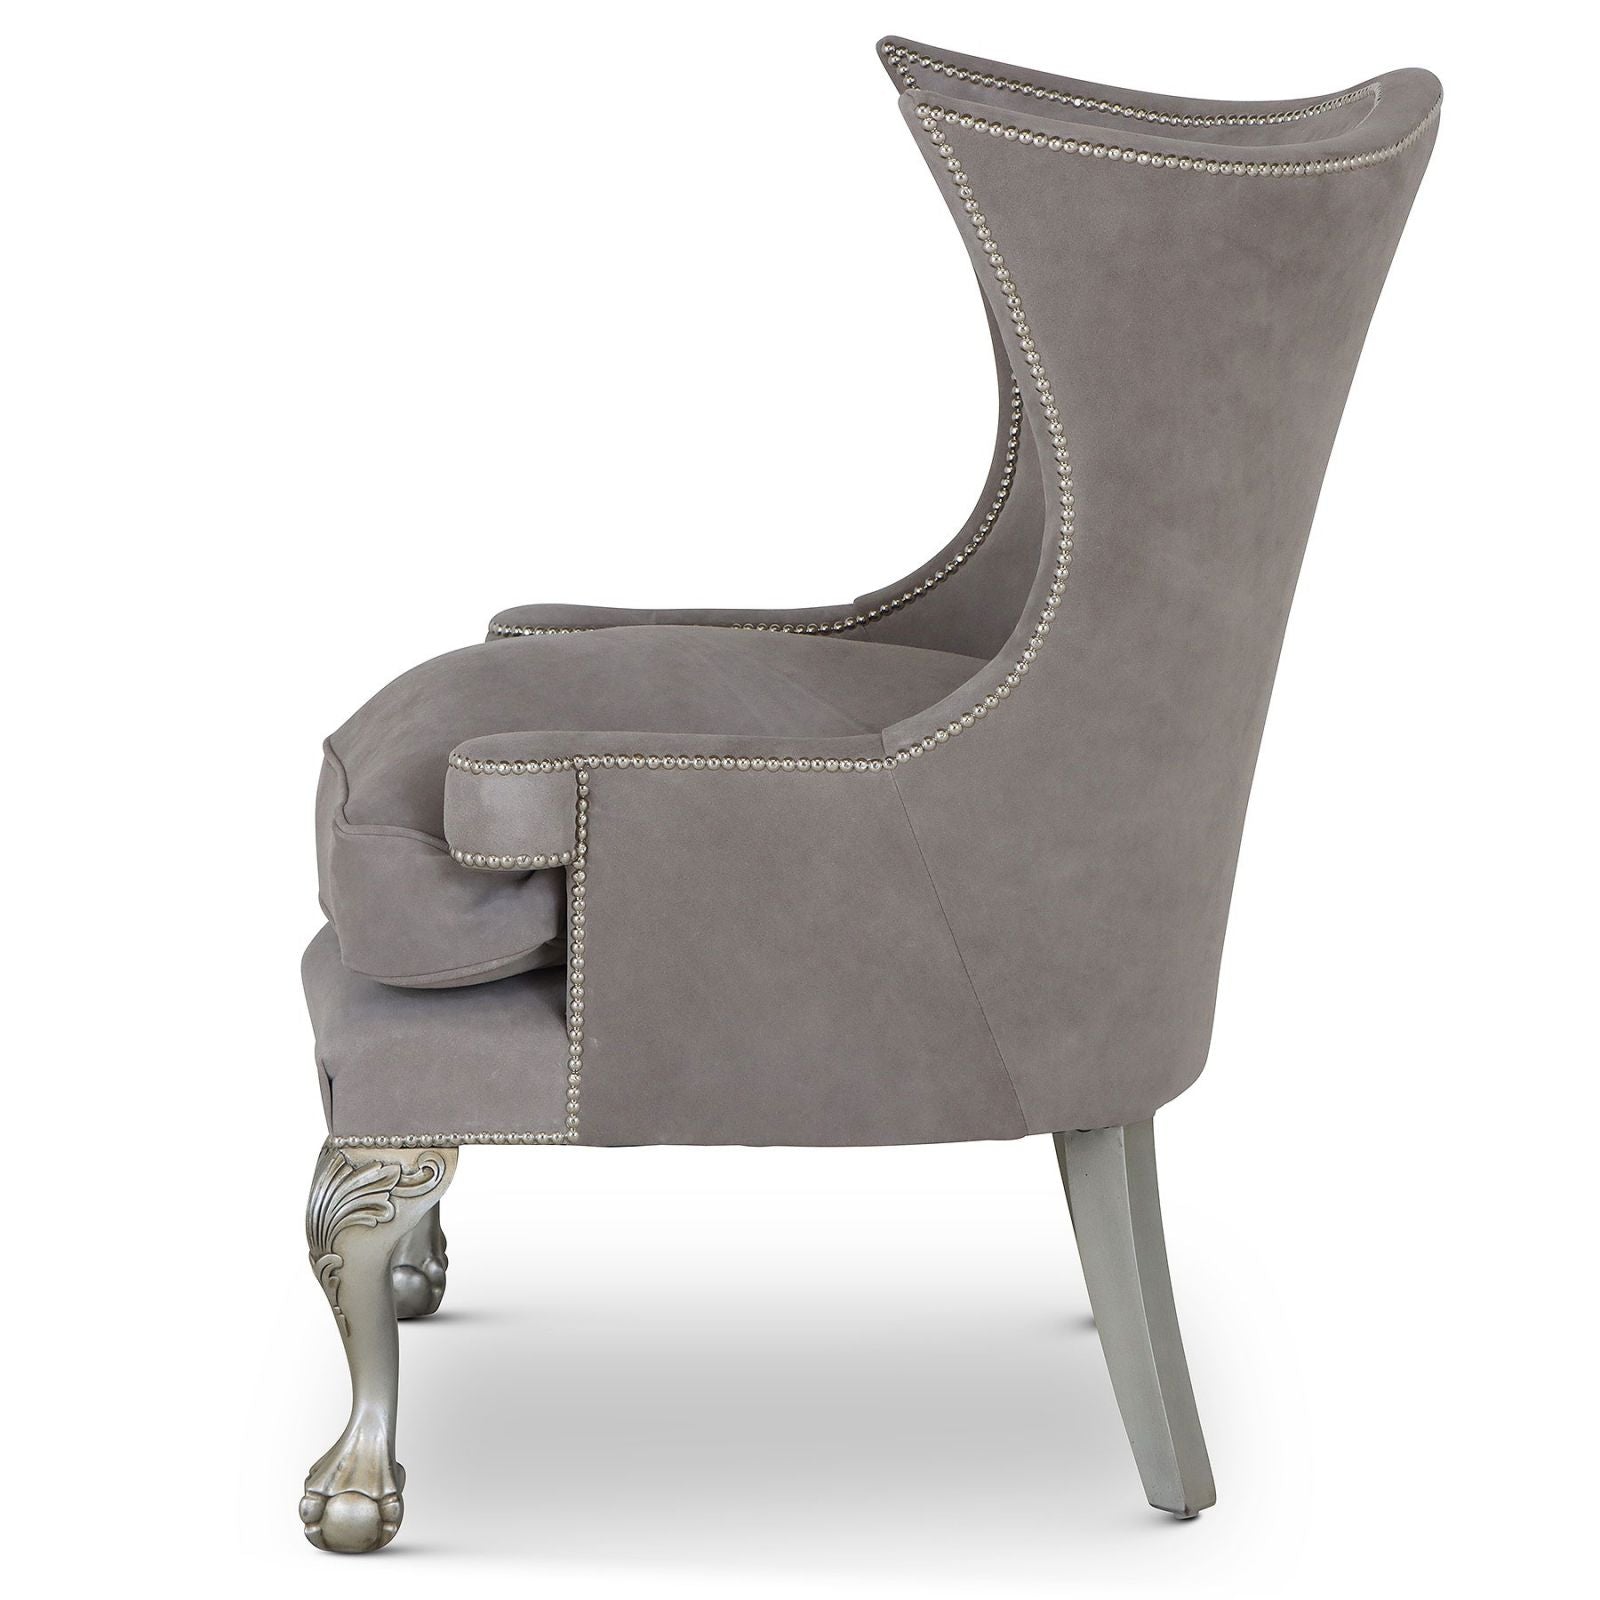 Okeford wing chair in grey suede calf hide